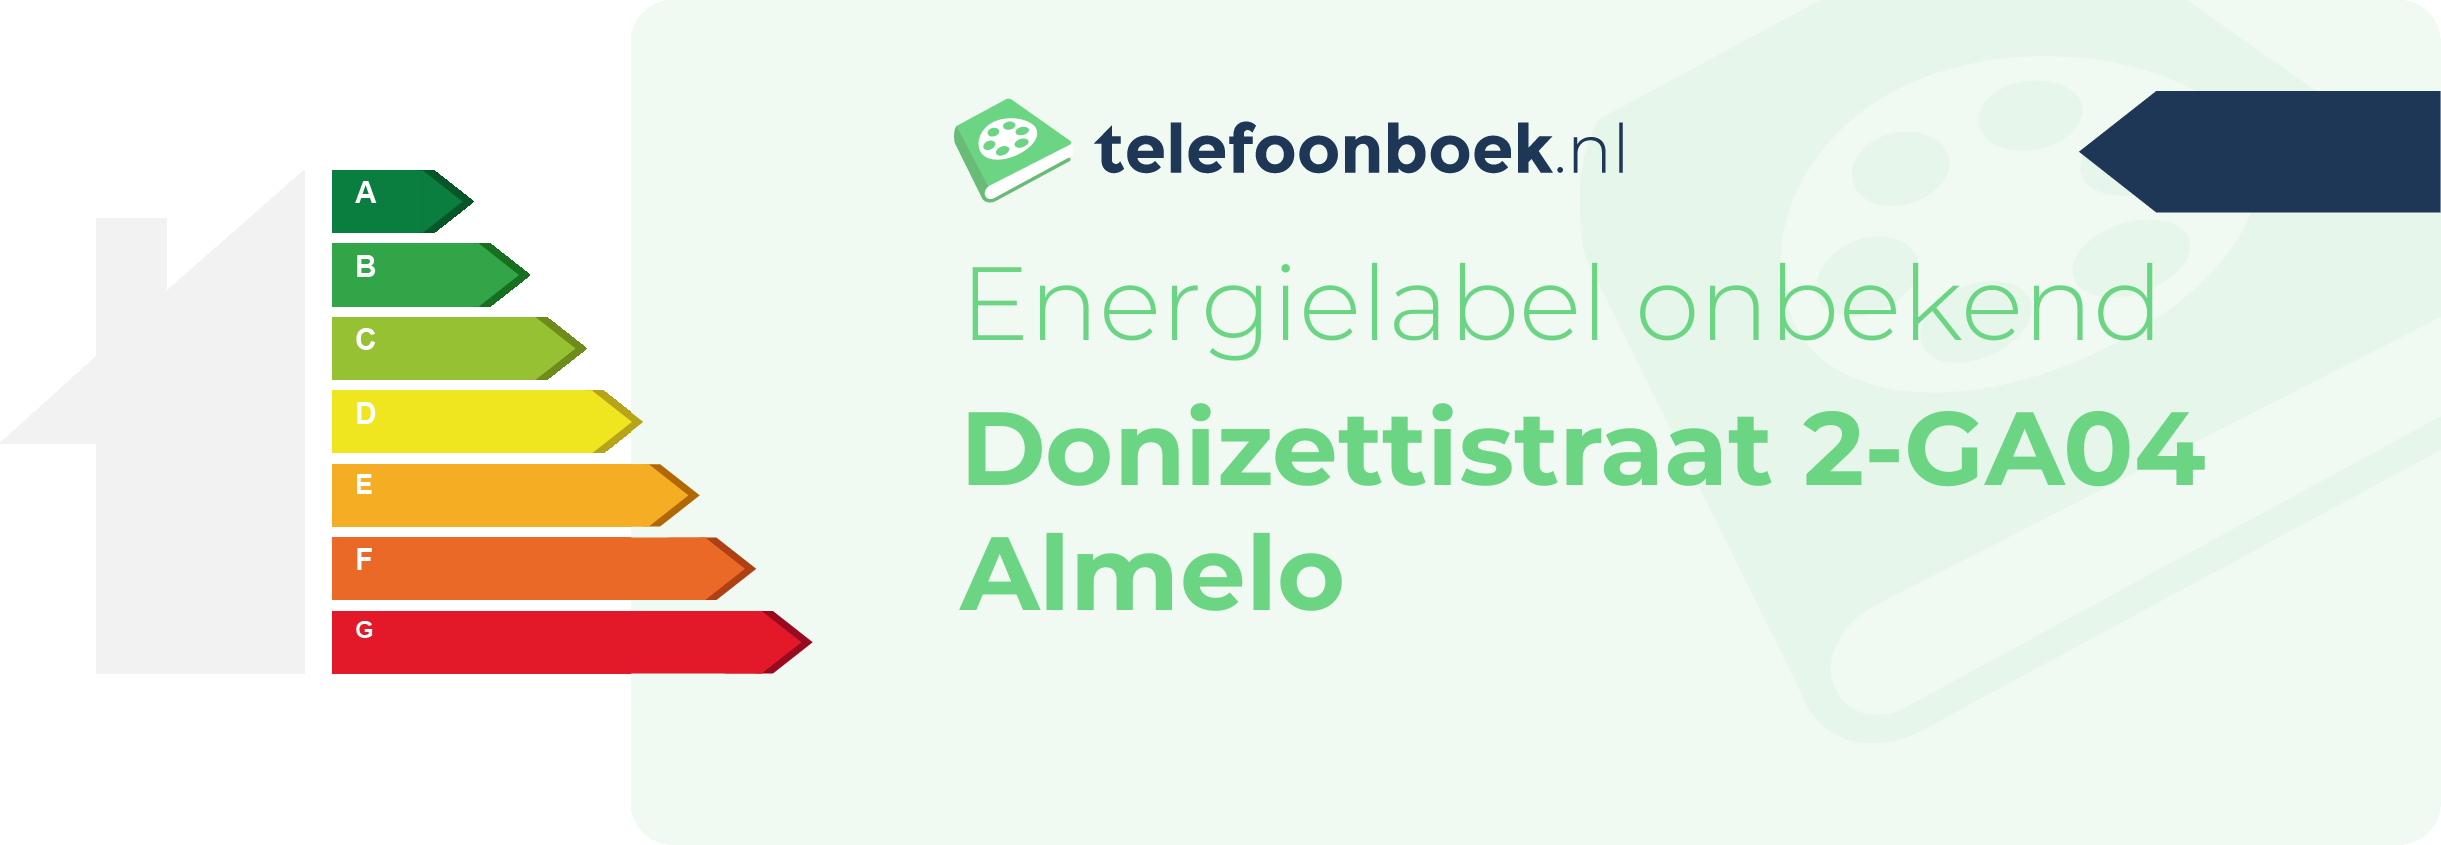 Energielabel Donizettistraat 2-GA04 Almelo